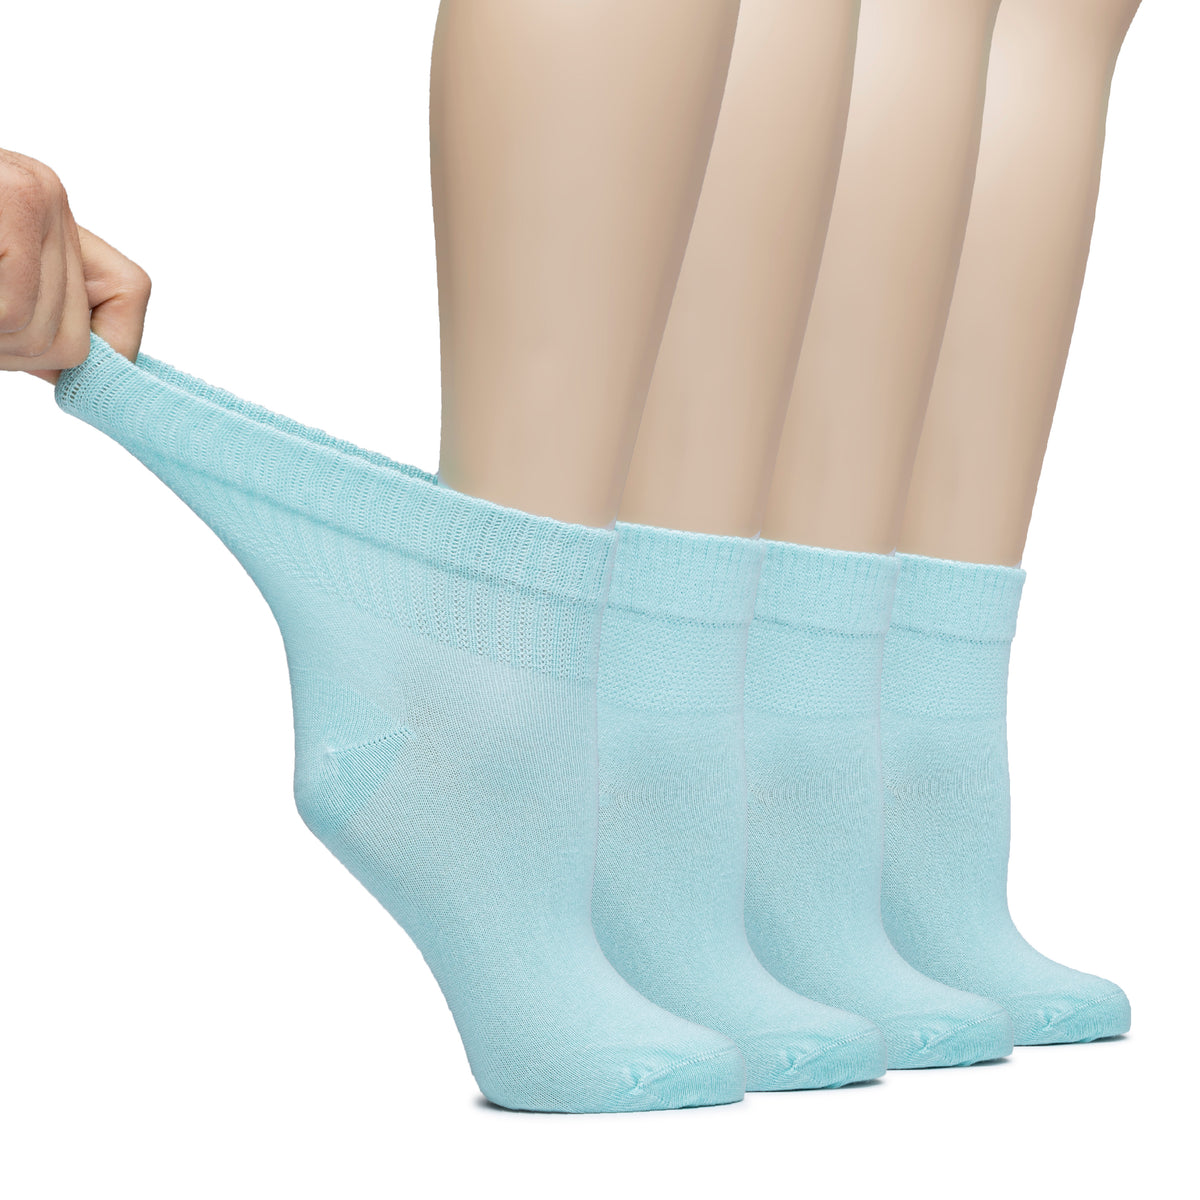 Hugh Ugoli Lightweight Women's Diabetic Ankle Socks Bamboo Thin Socks Seamless Toe and Non-Binding Top, 4 Pairs, , Shoe Size: 6-9/10-12 | Shoe Size: 10-12 | Pool Blue